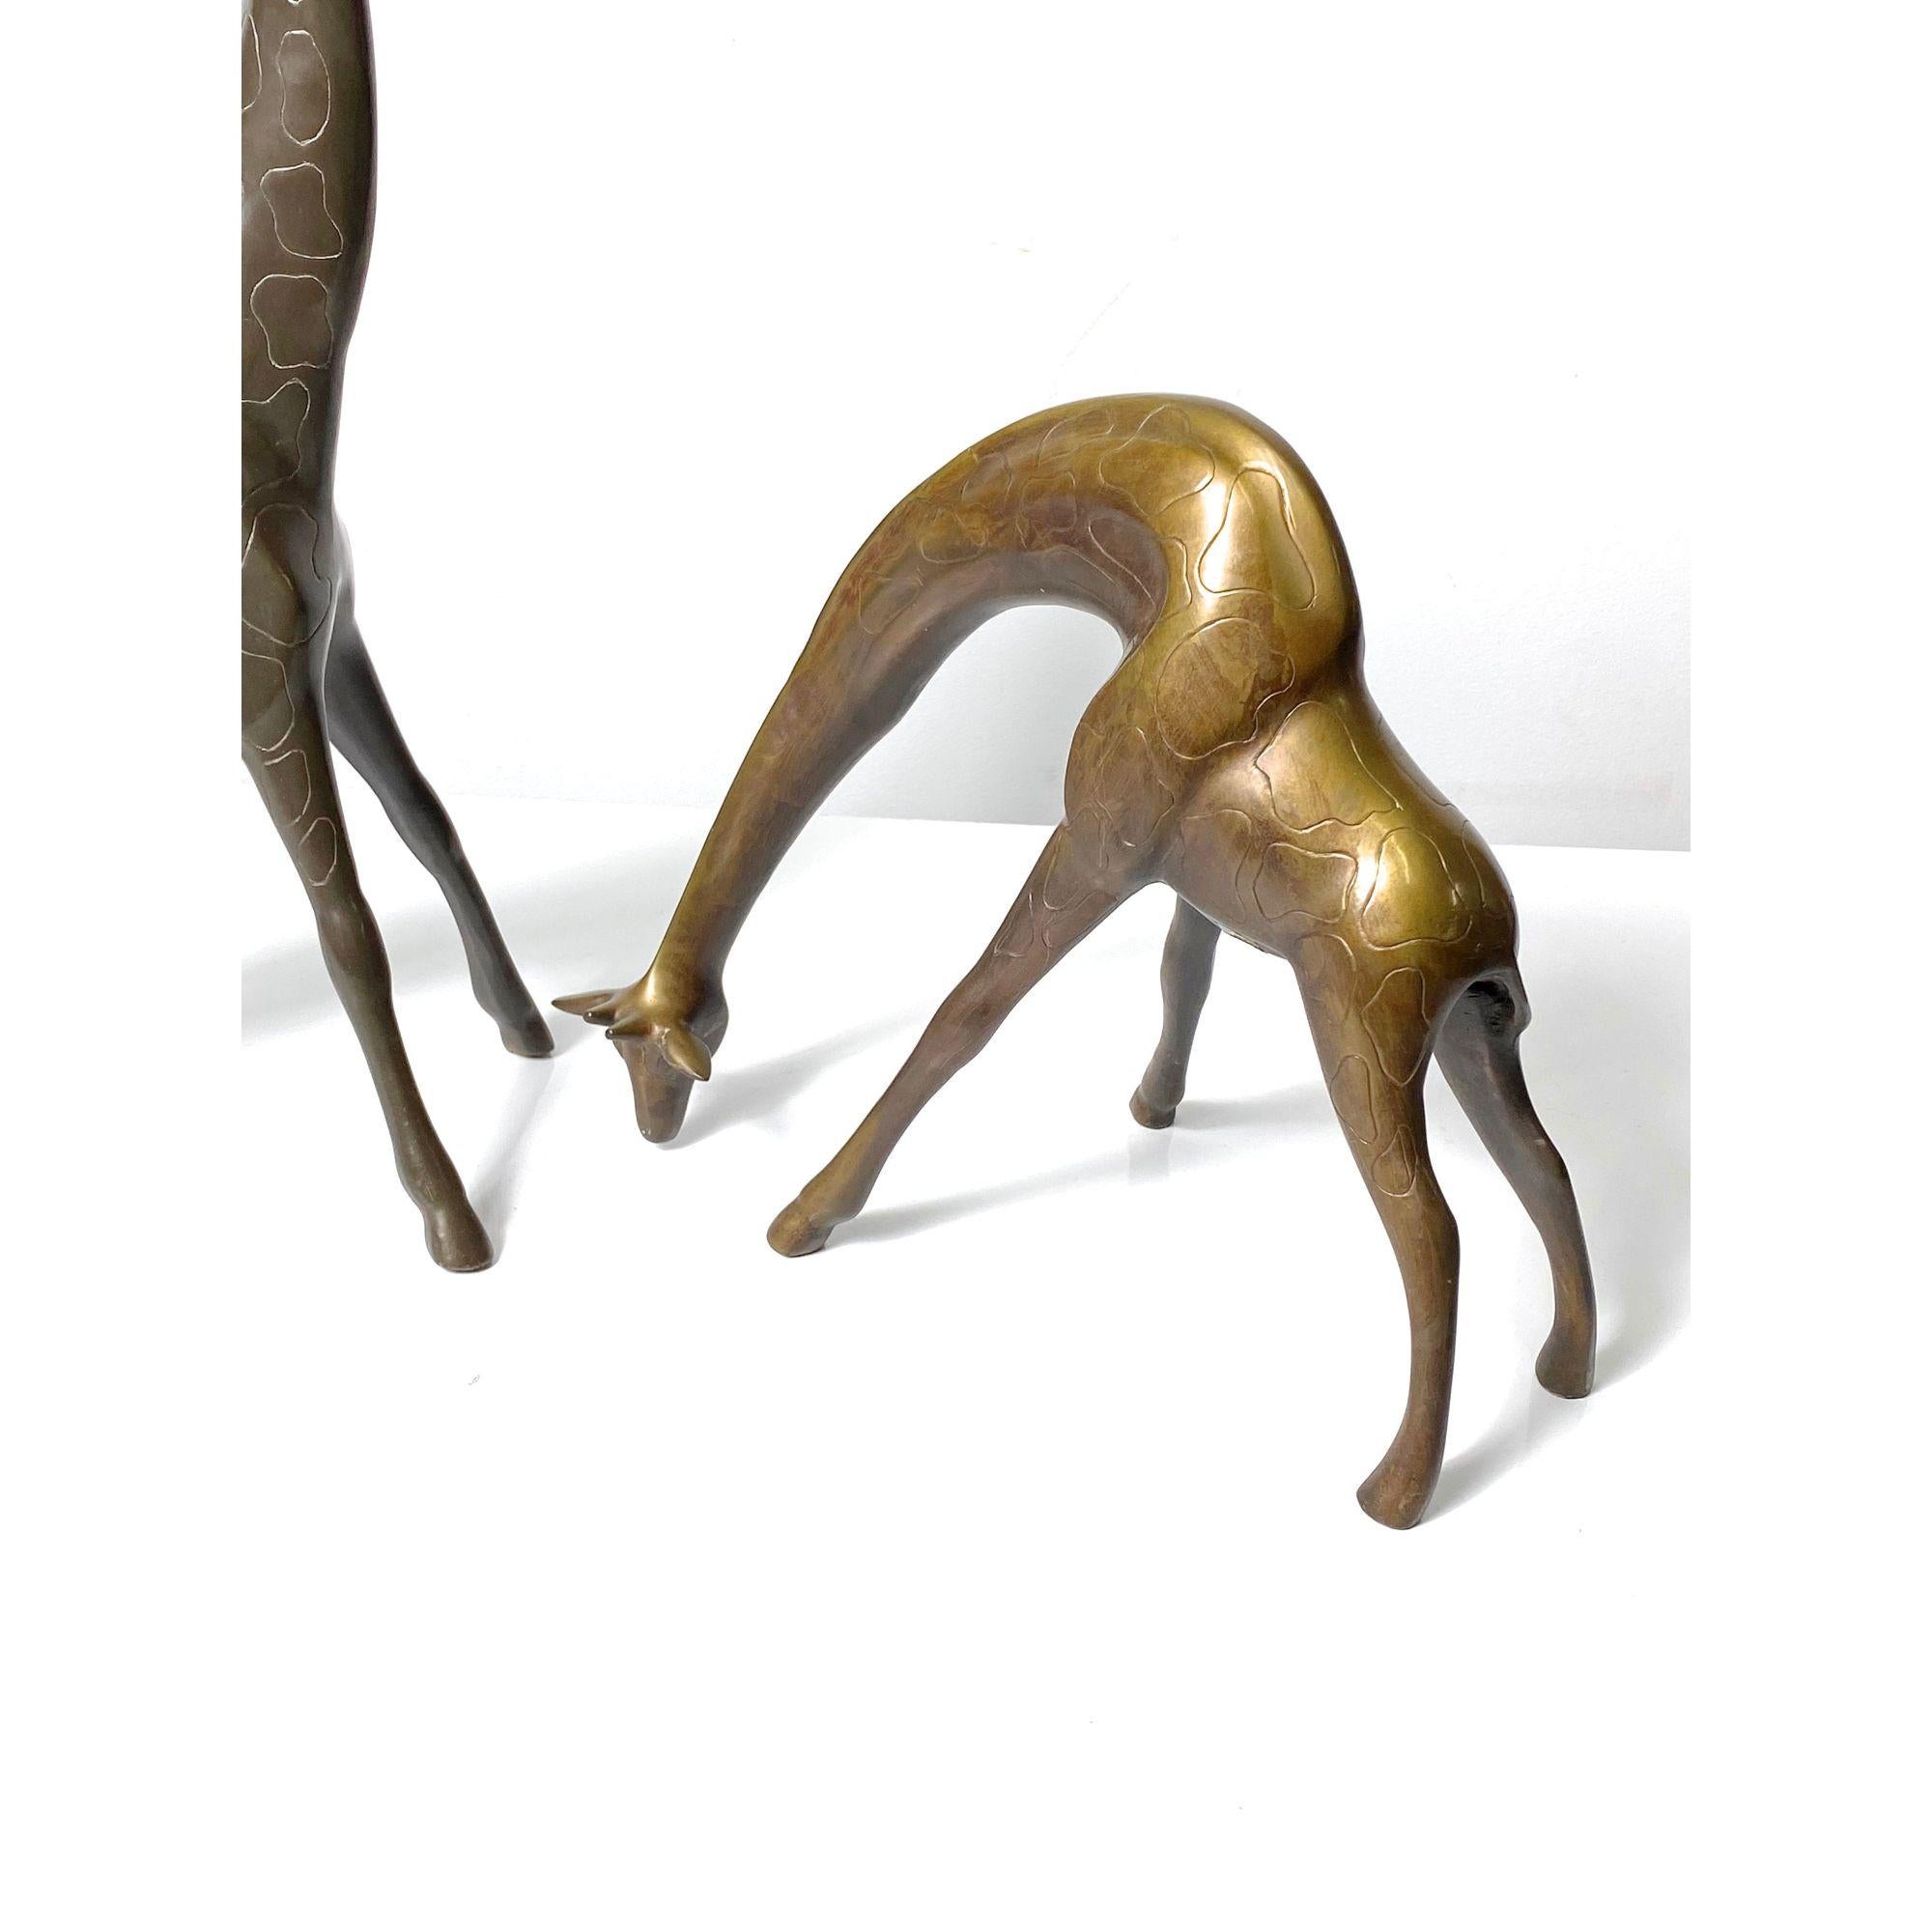 20th Century Pair of Vintage Giraffe Sculptures in Bronze and Brass, circa 1970s